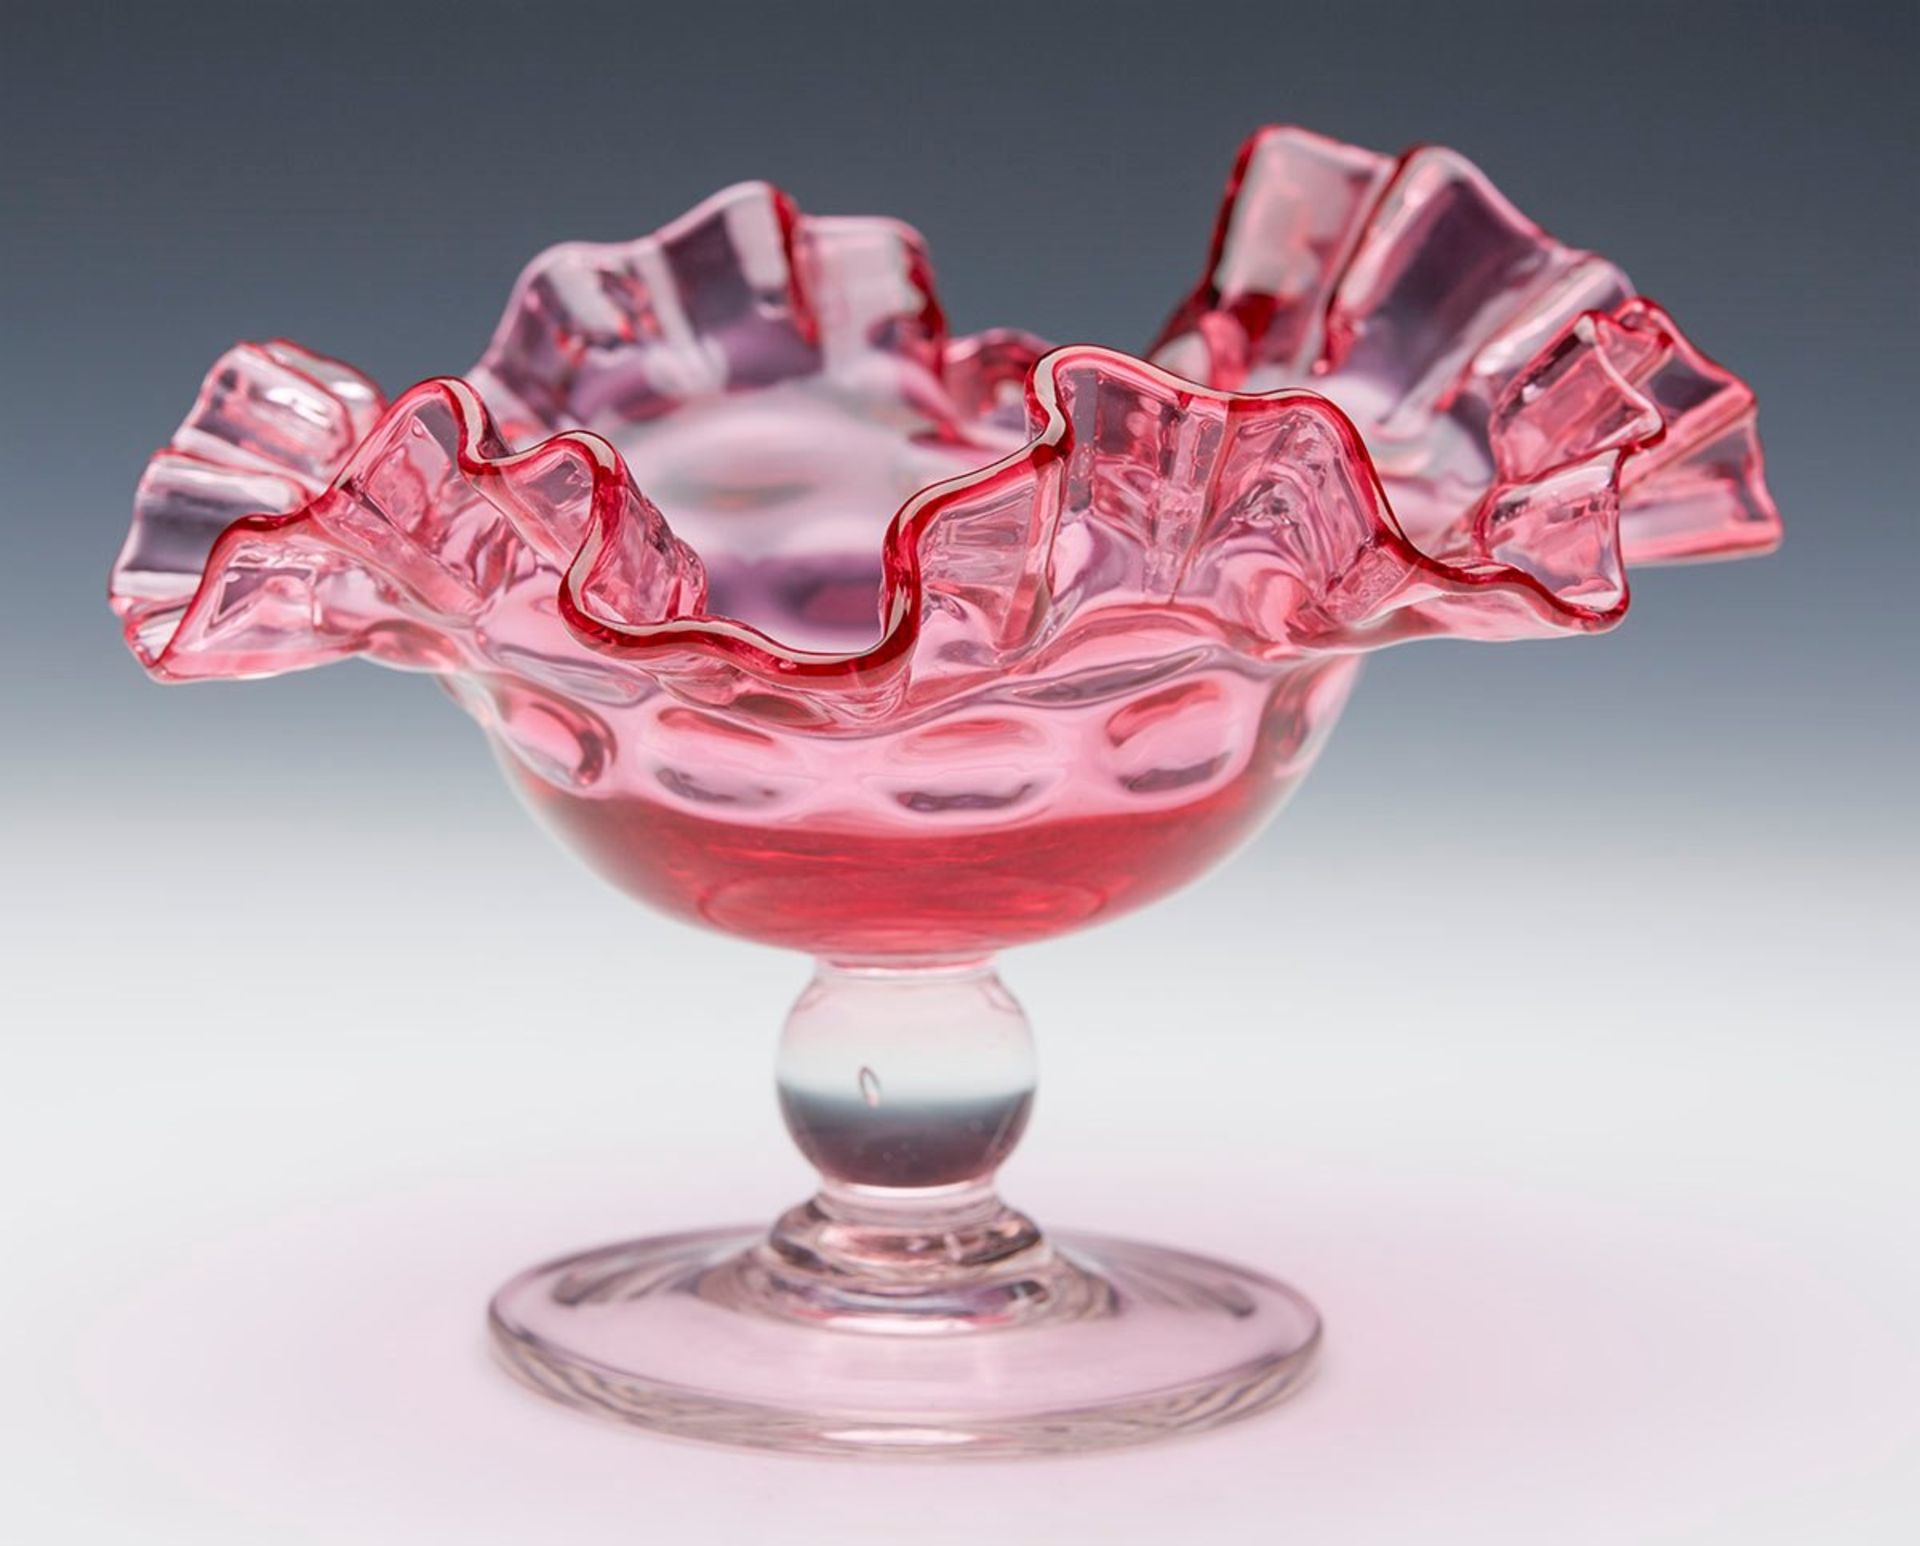 ANTIQUE/VINTAGE CRANBERRY GLASS PEDESTAL DISH 19/20TH C. - Image 4 of 7